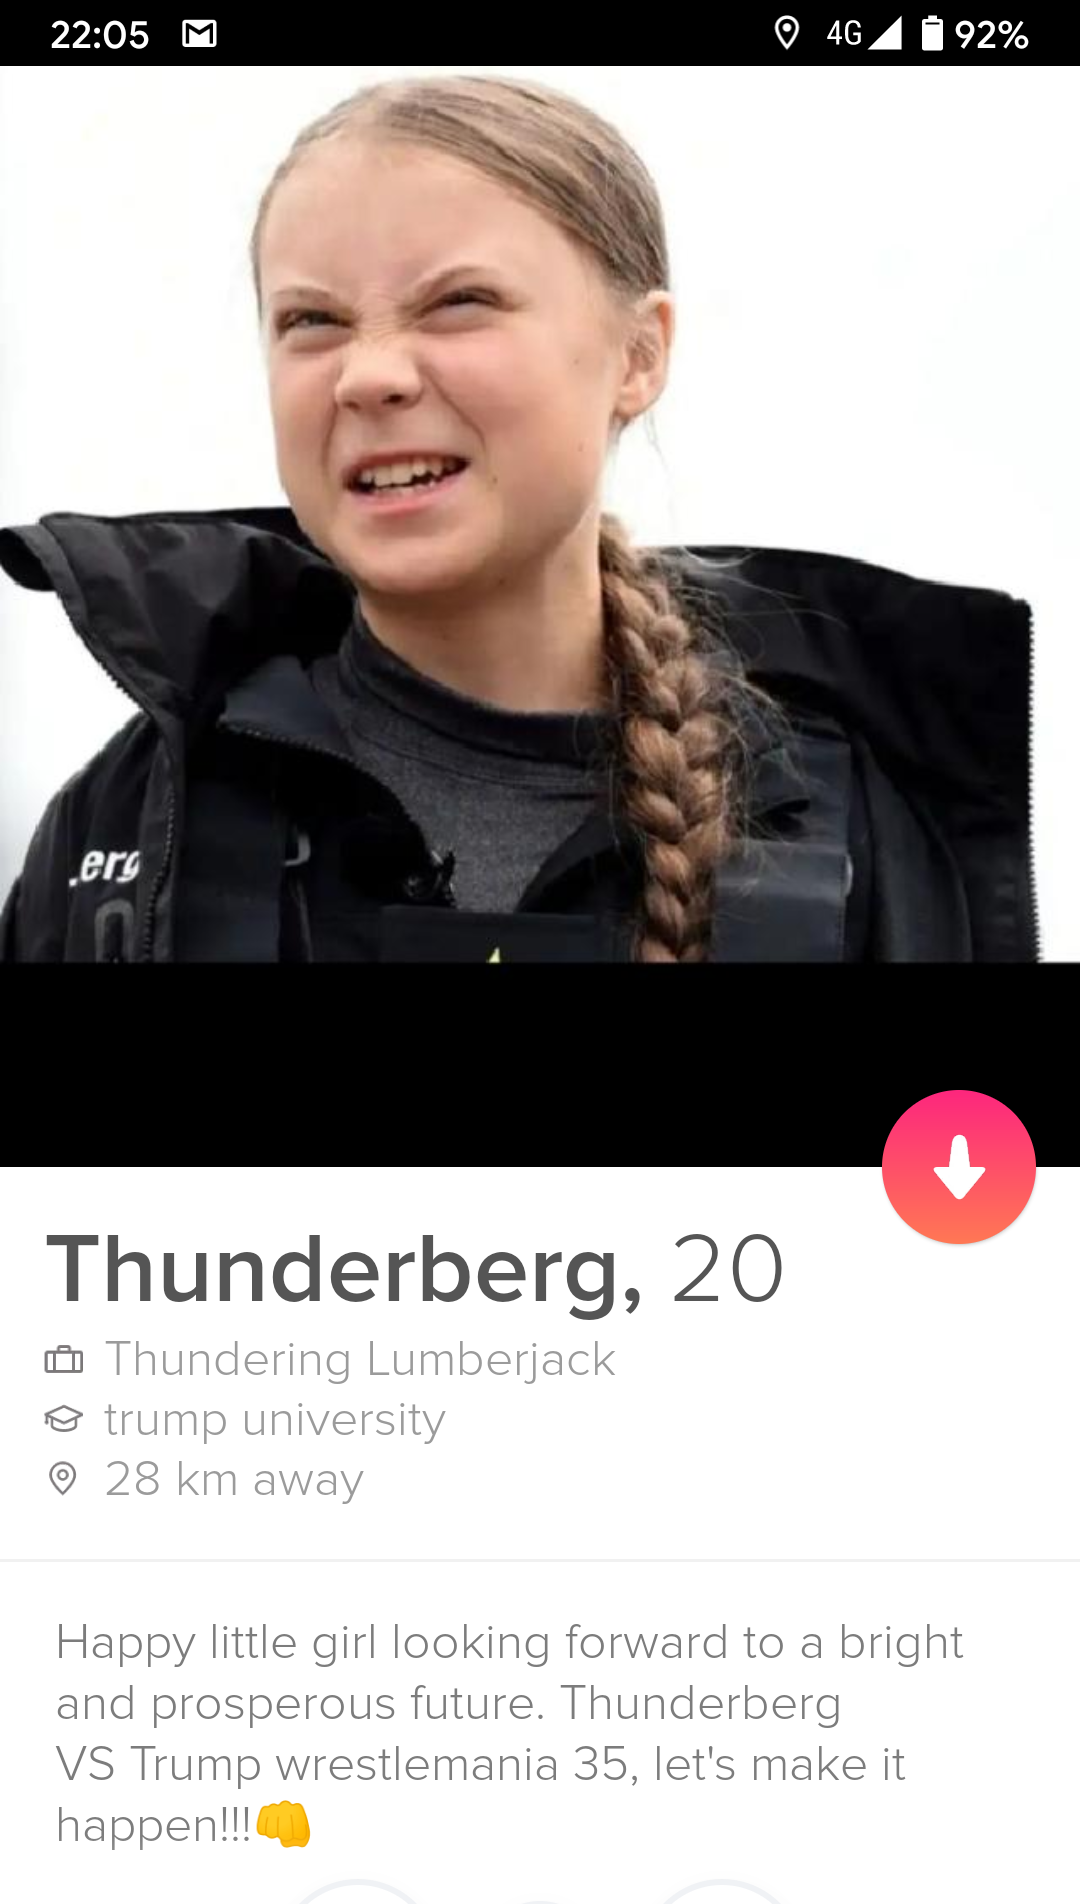 greta thunberg angry - M 4G 92% Thunderberg, 20 Thundering Lumberjack trump university 28 km away Happy little girl looking forward to a bright and prosperous future. Thunderberg Vs Trump wrestlemania 35. let's make it happen!!!